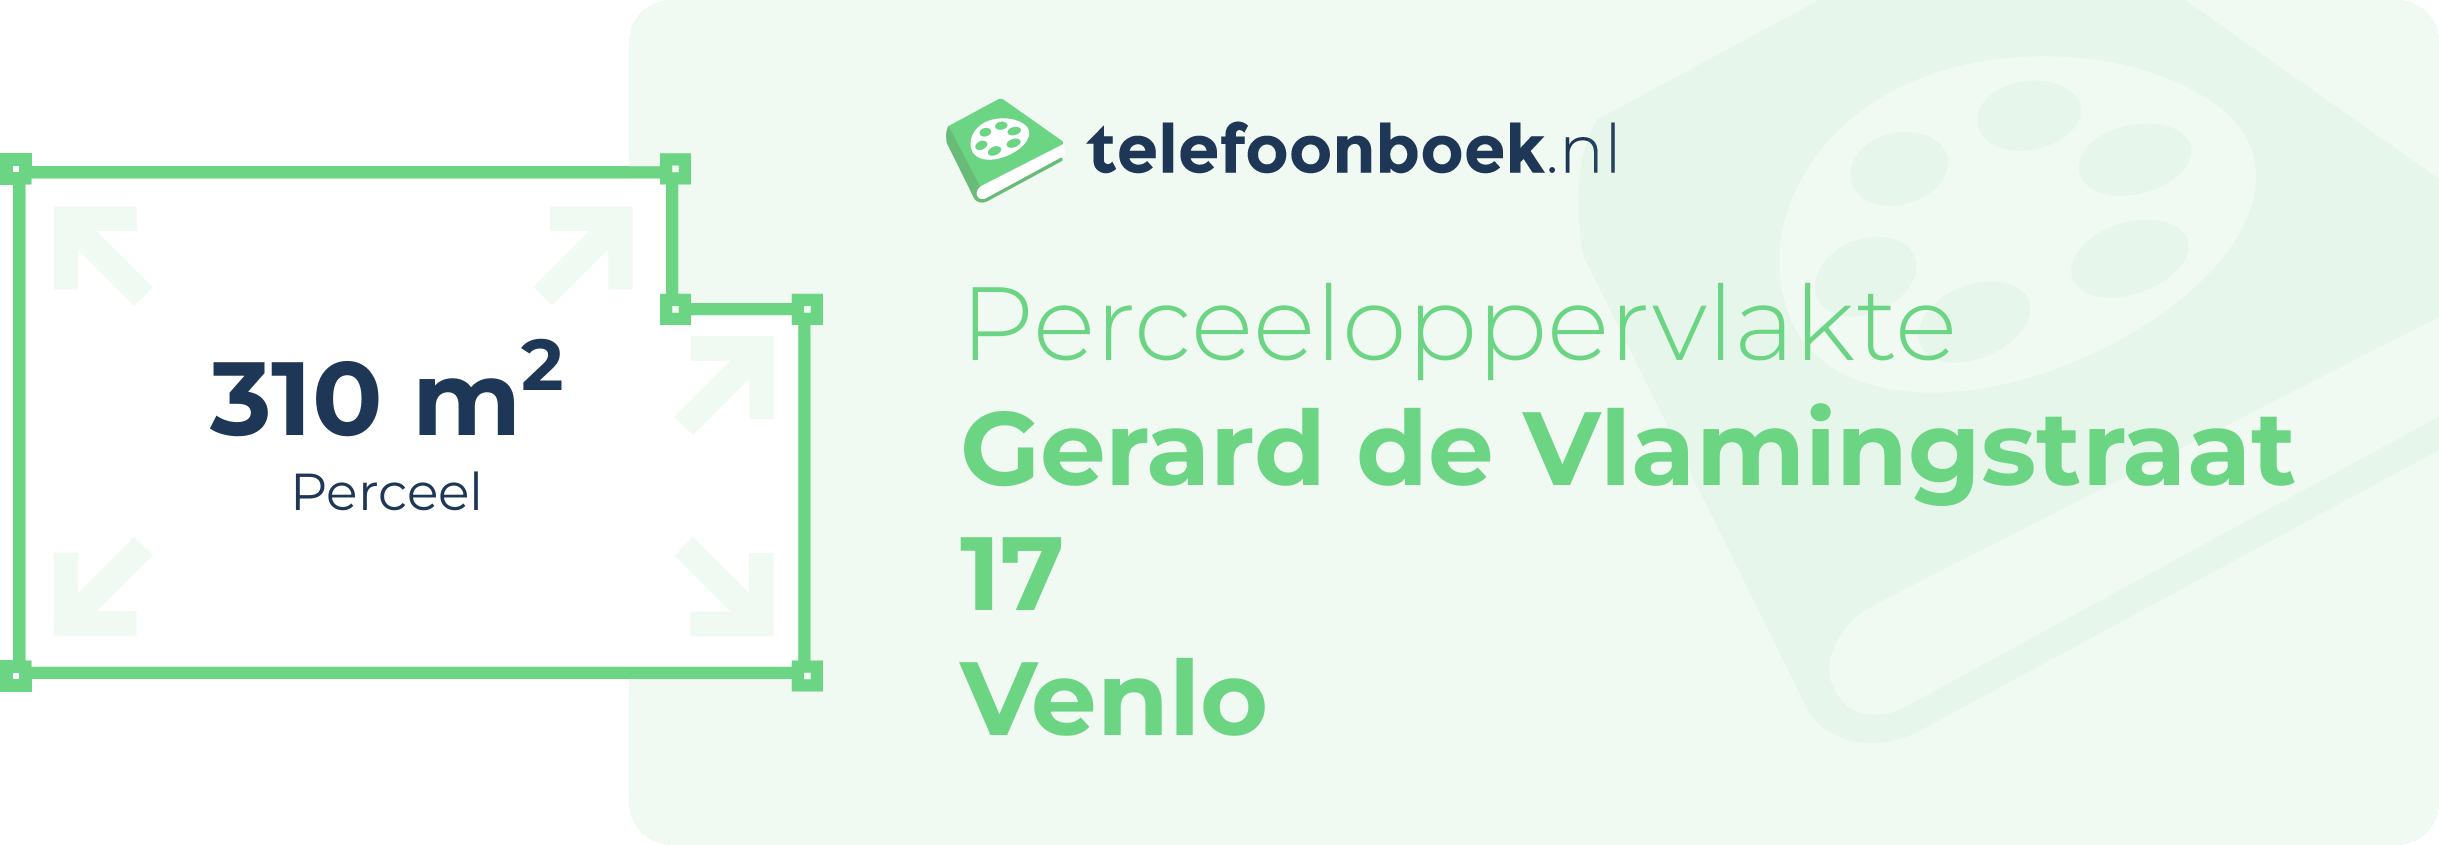 Perceeloppervlakte Gerard De Vlamingstraat 17 Venlo